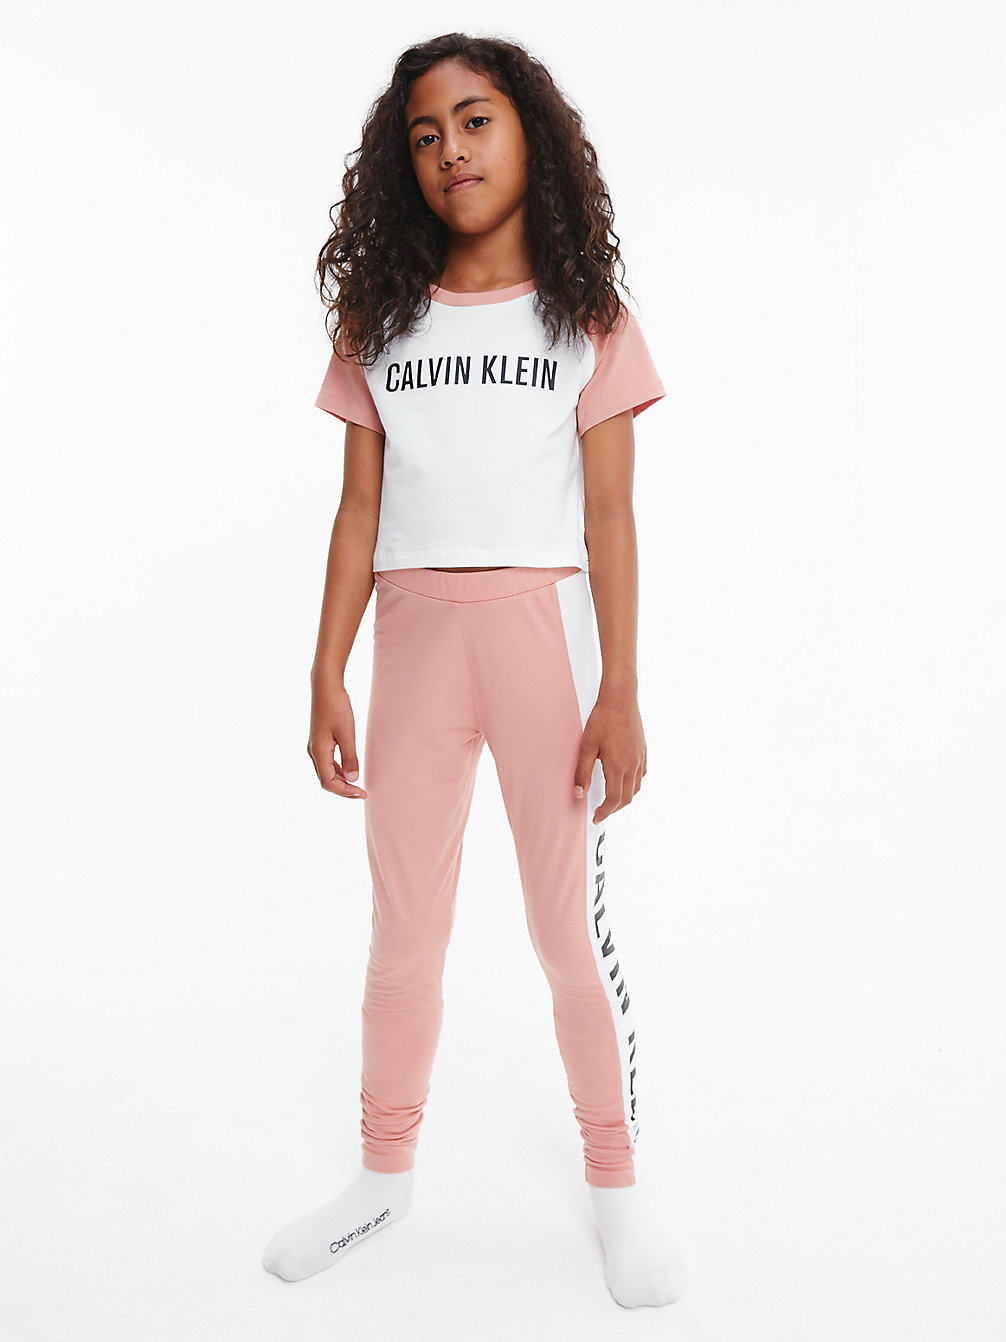 PINKMOCHA/W/PVHWHITE Pyjamaset - Intense Power undefined girls Calvin Klein